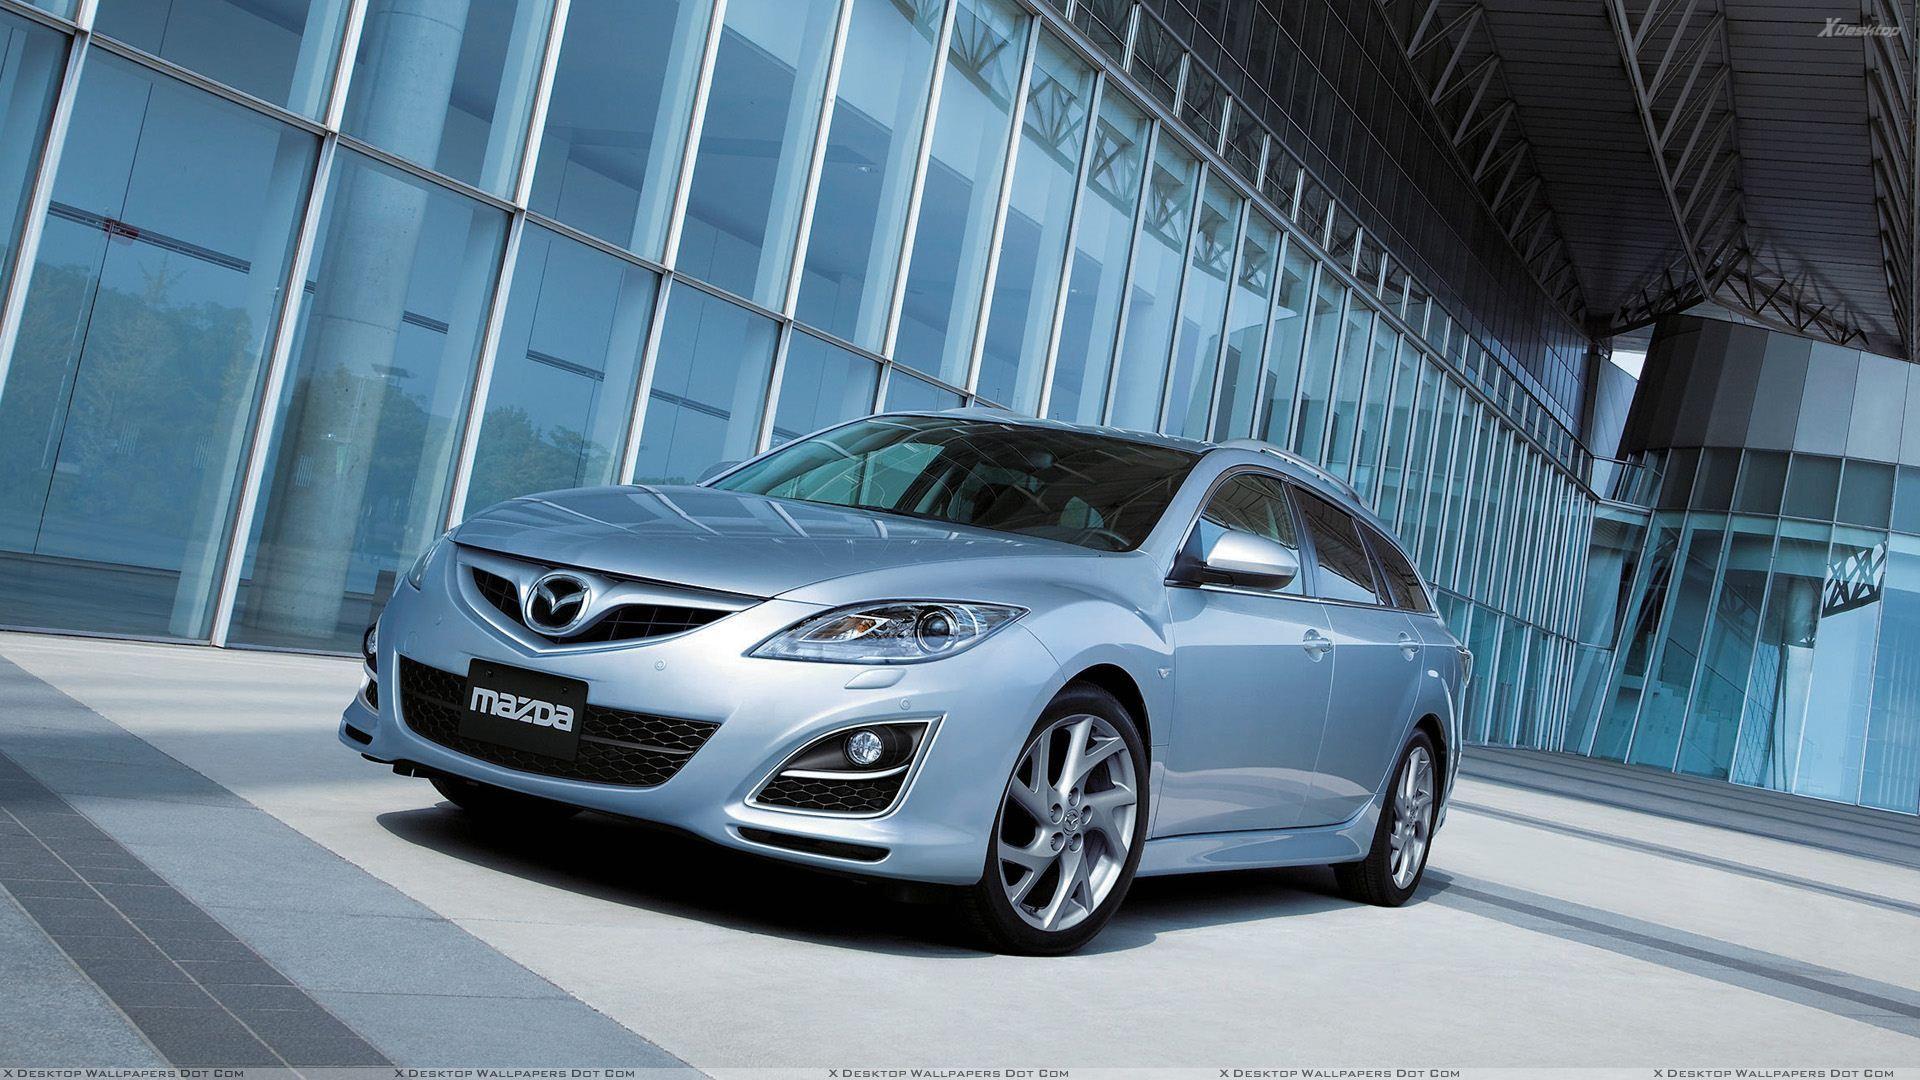 Mazda 6 Wallpaper, Photo & Image in HD